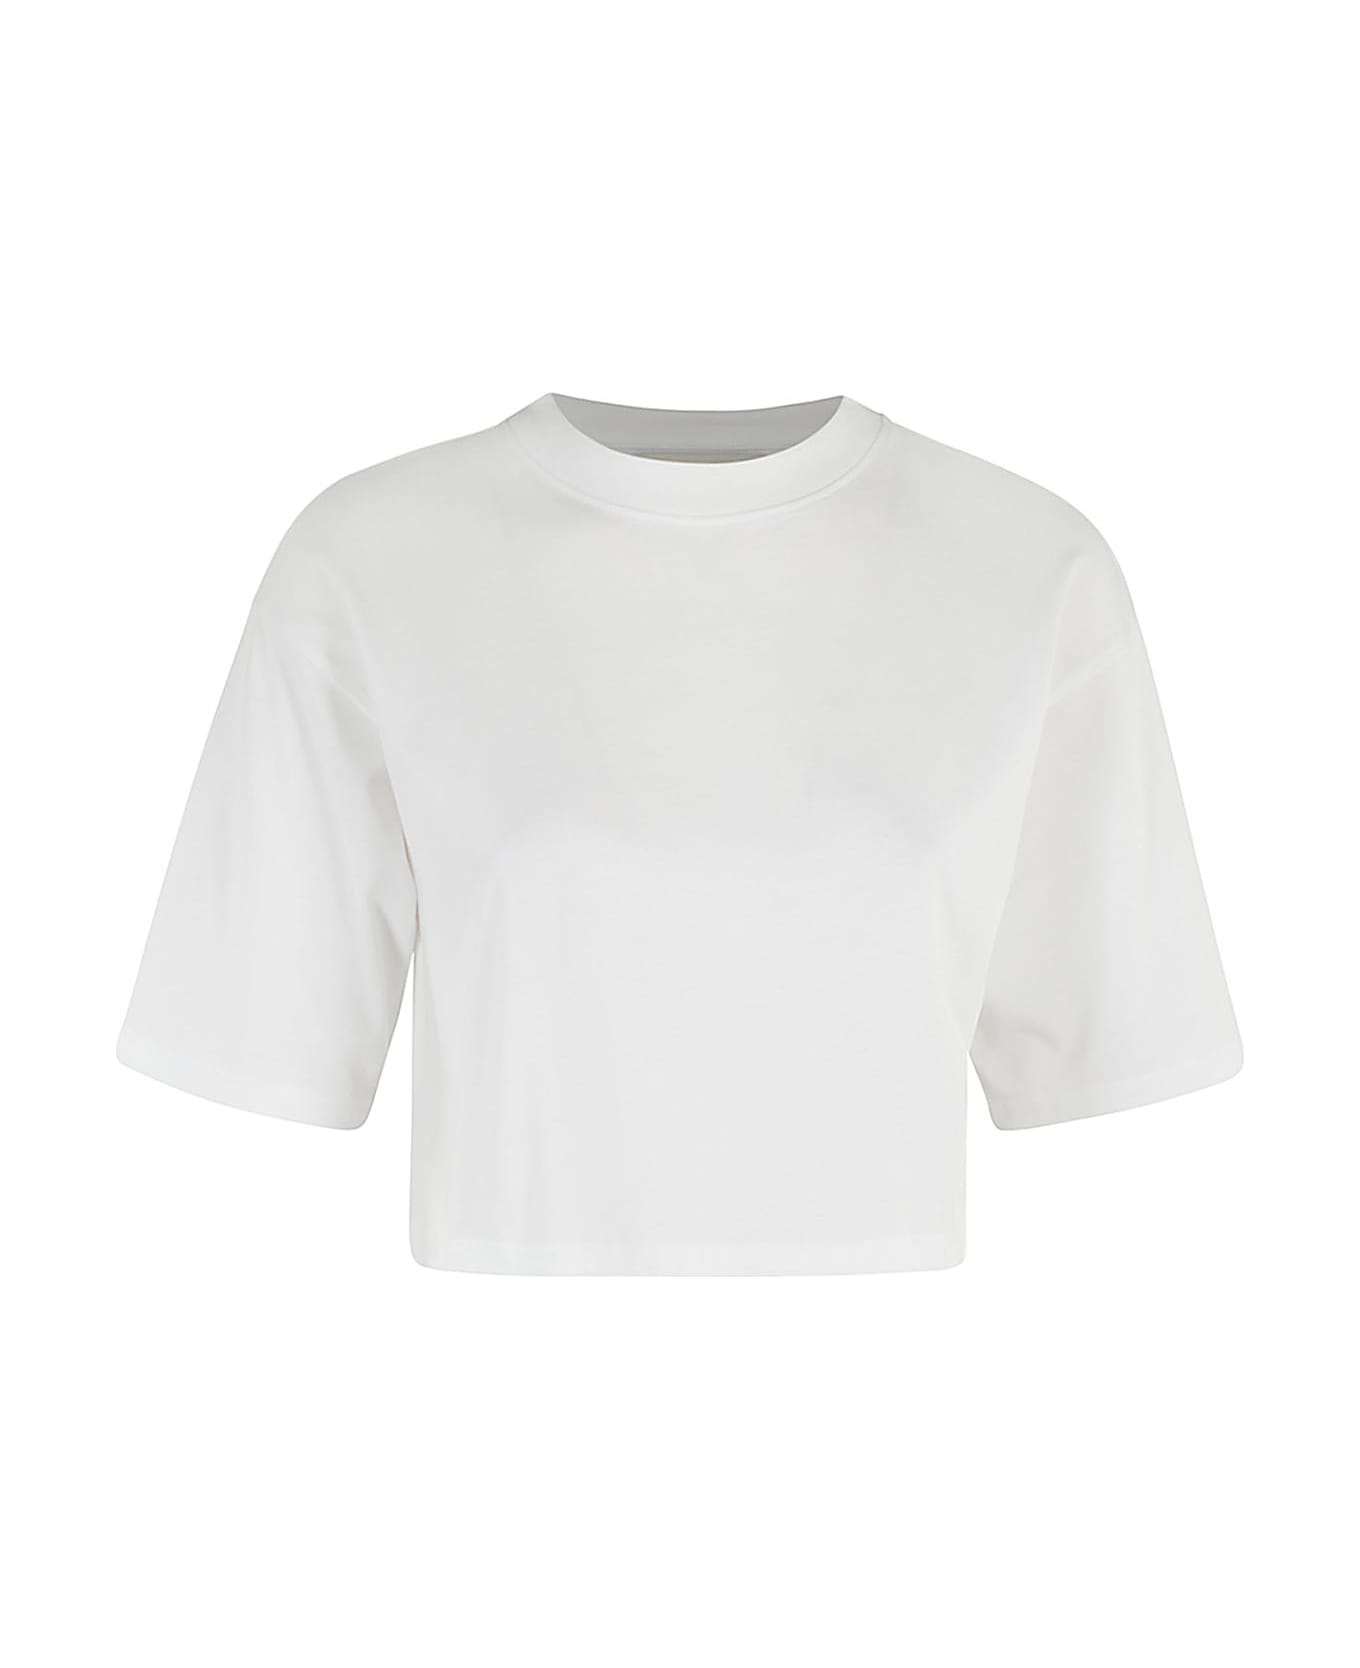 Loulou Studio Cropped Tshirt - White Tシャツ